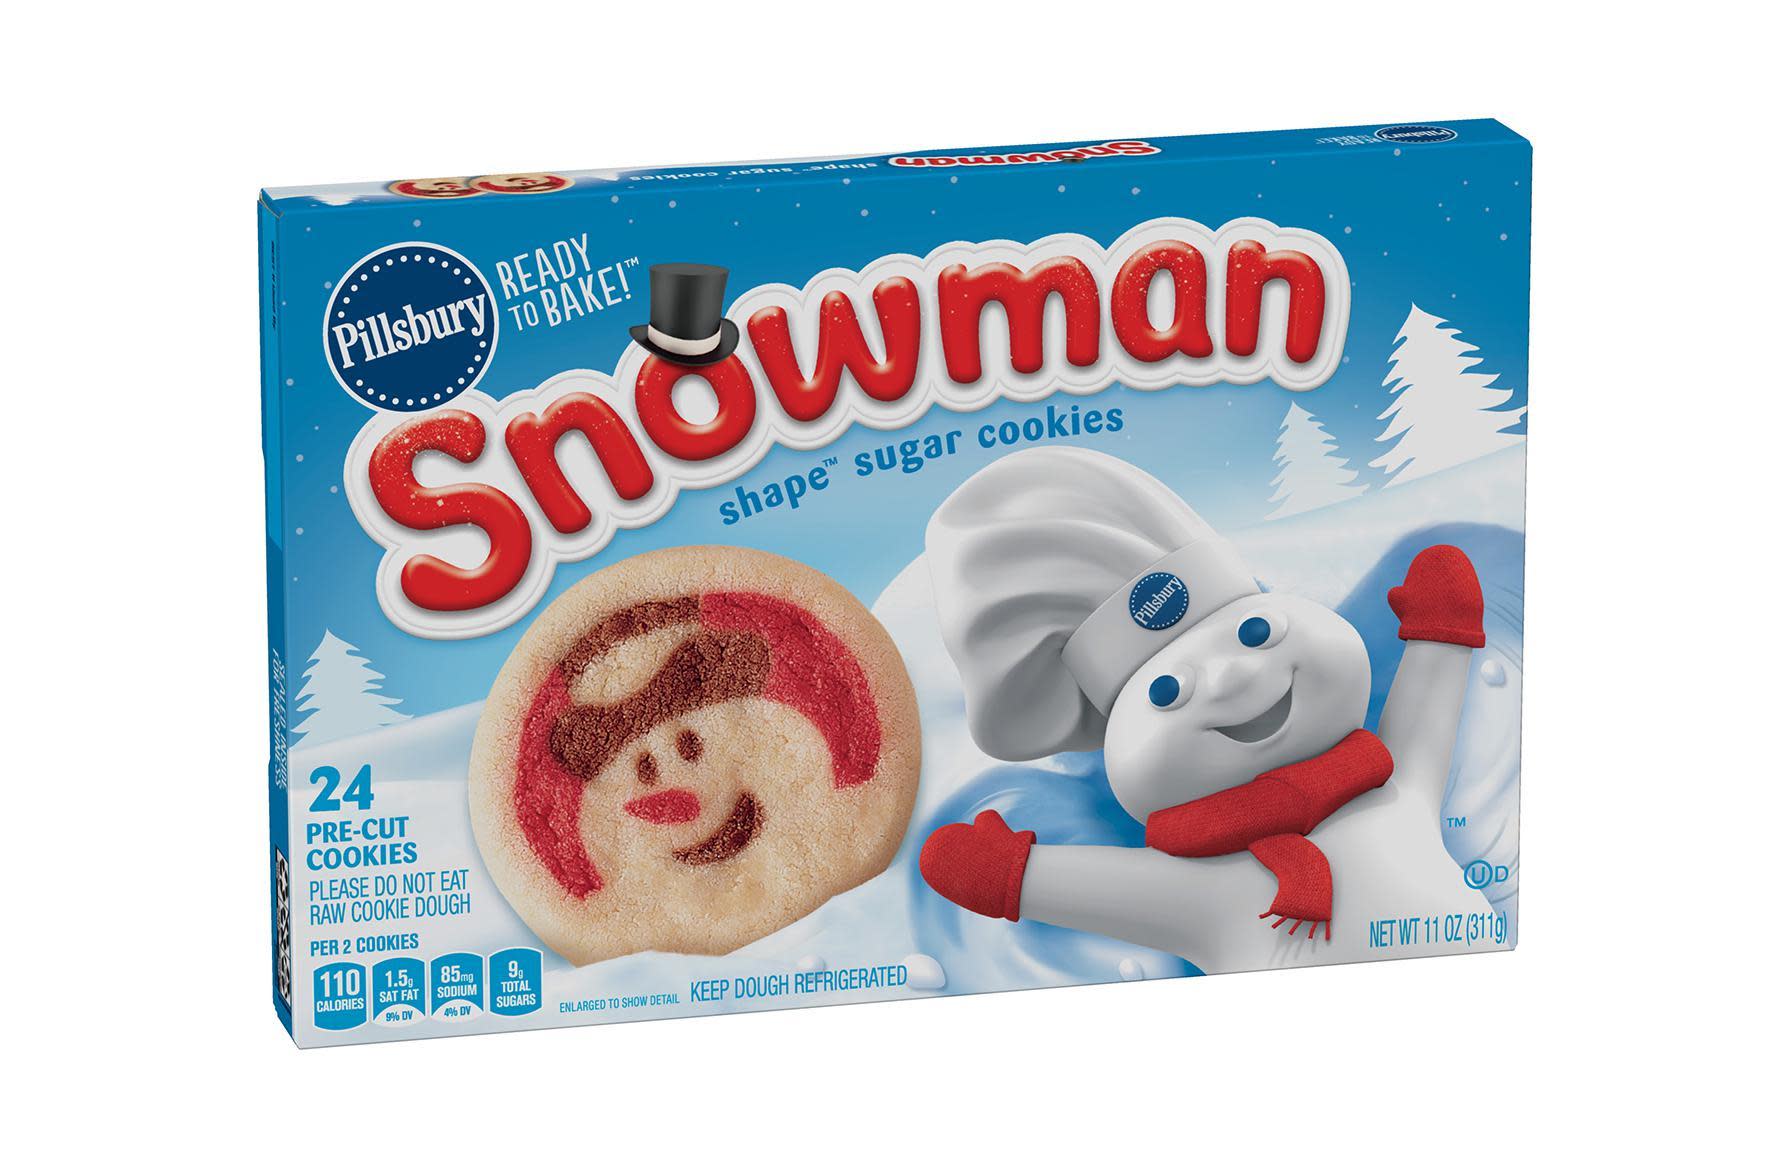 Pillsbury's winter shape sugar cookies are already here ...